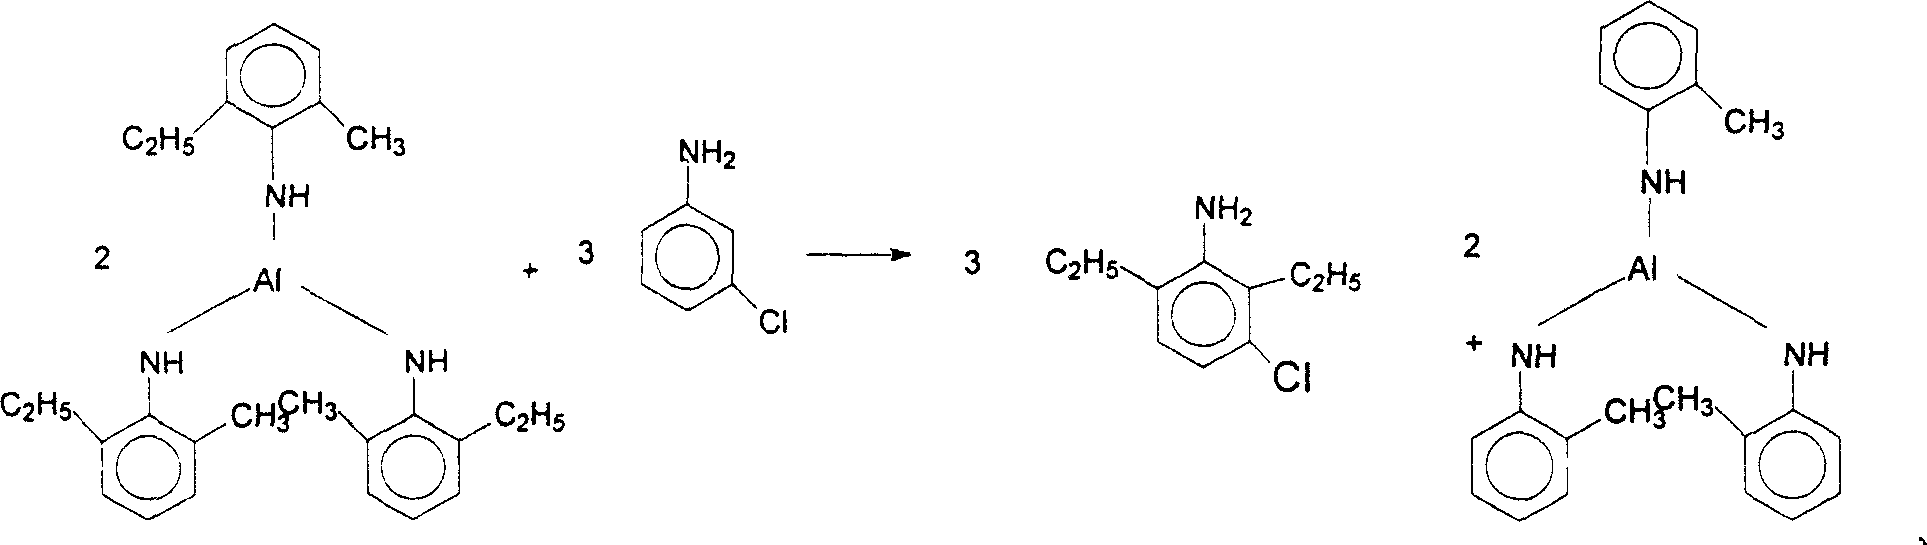 Preparation method of 3-chloro-2,6-diethyl aniline